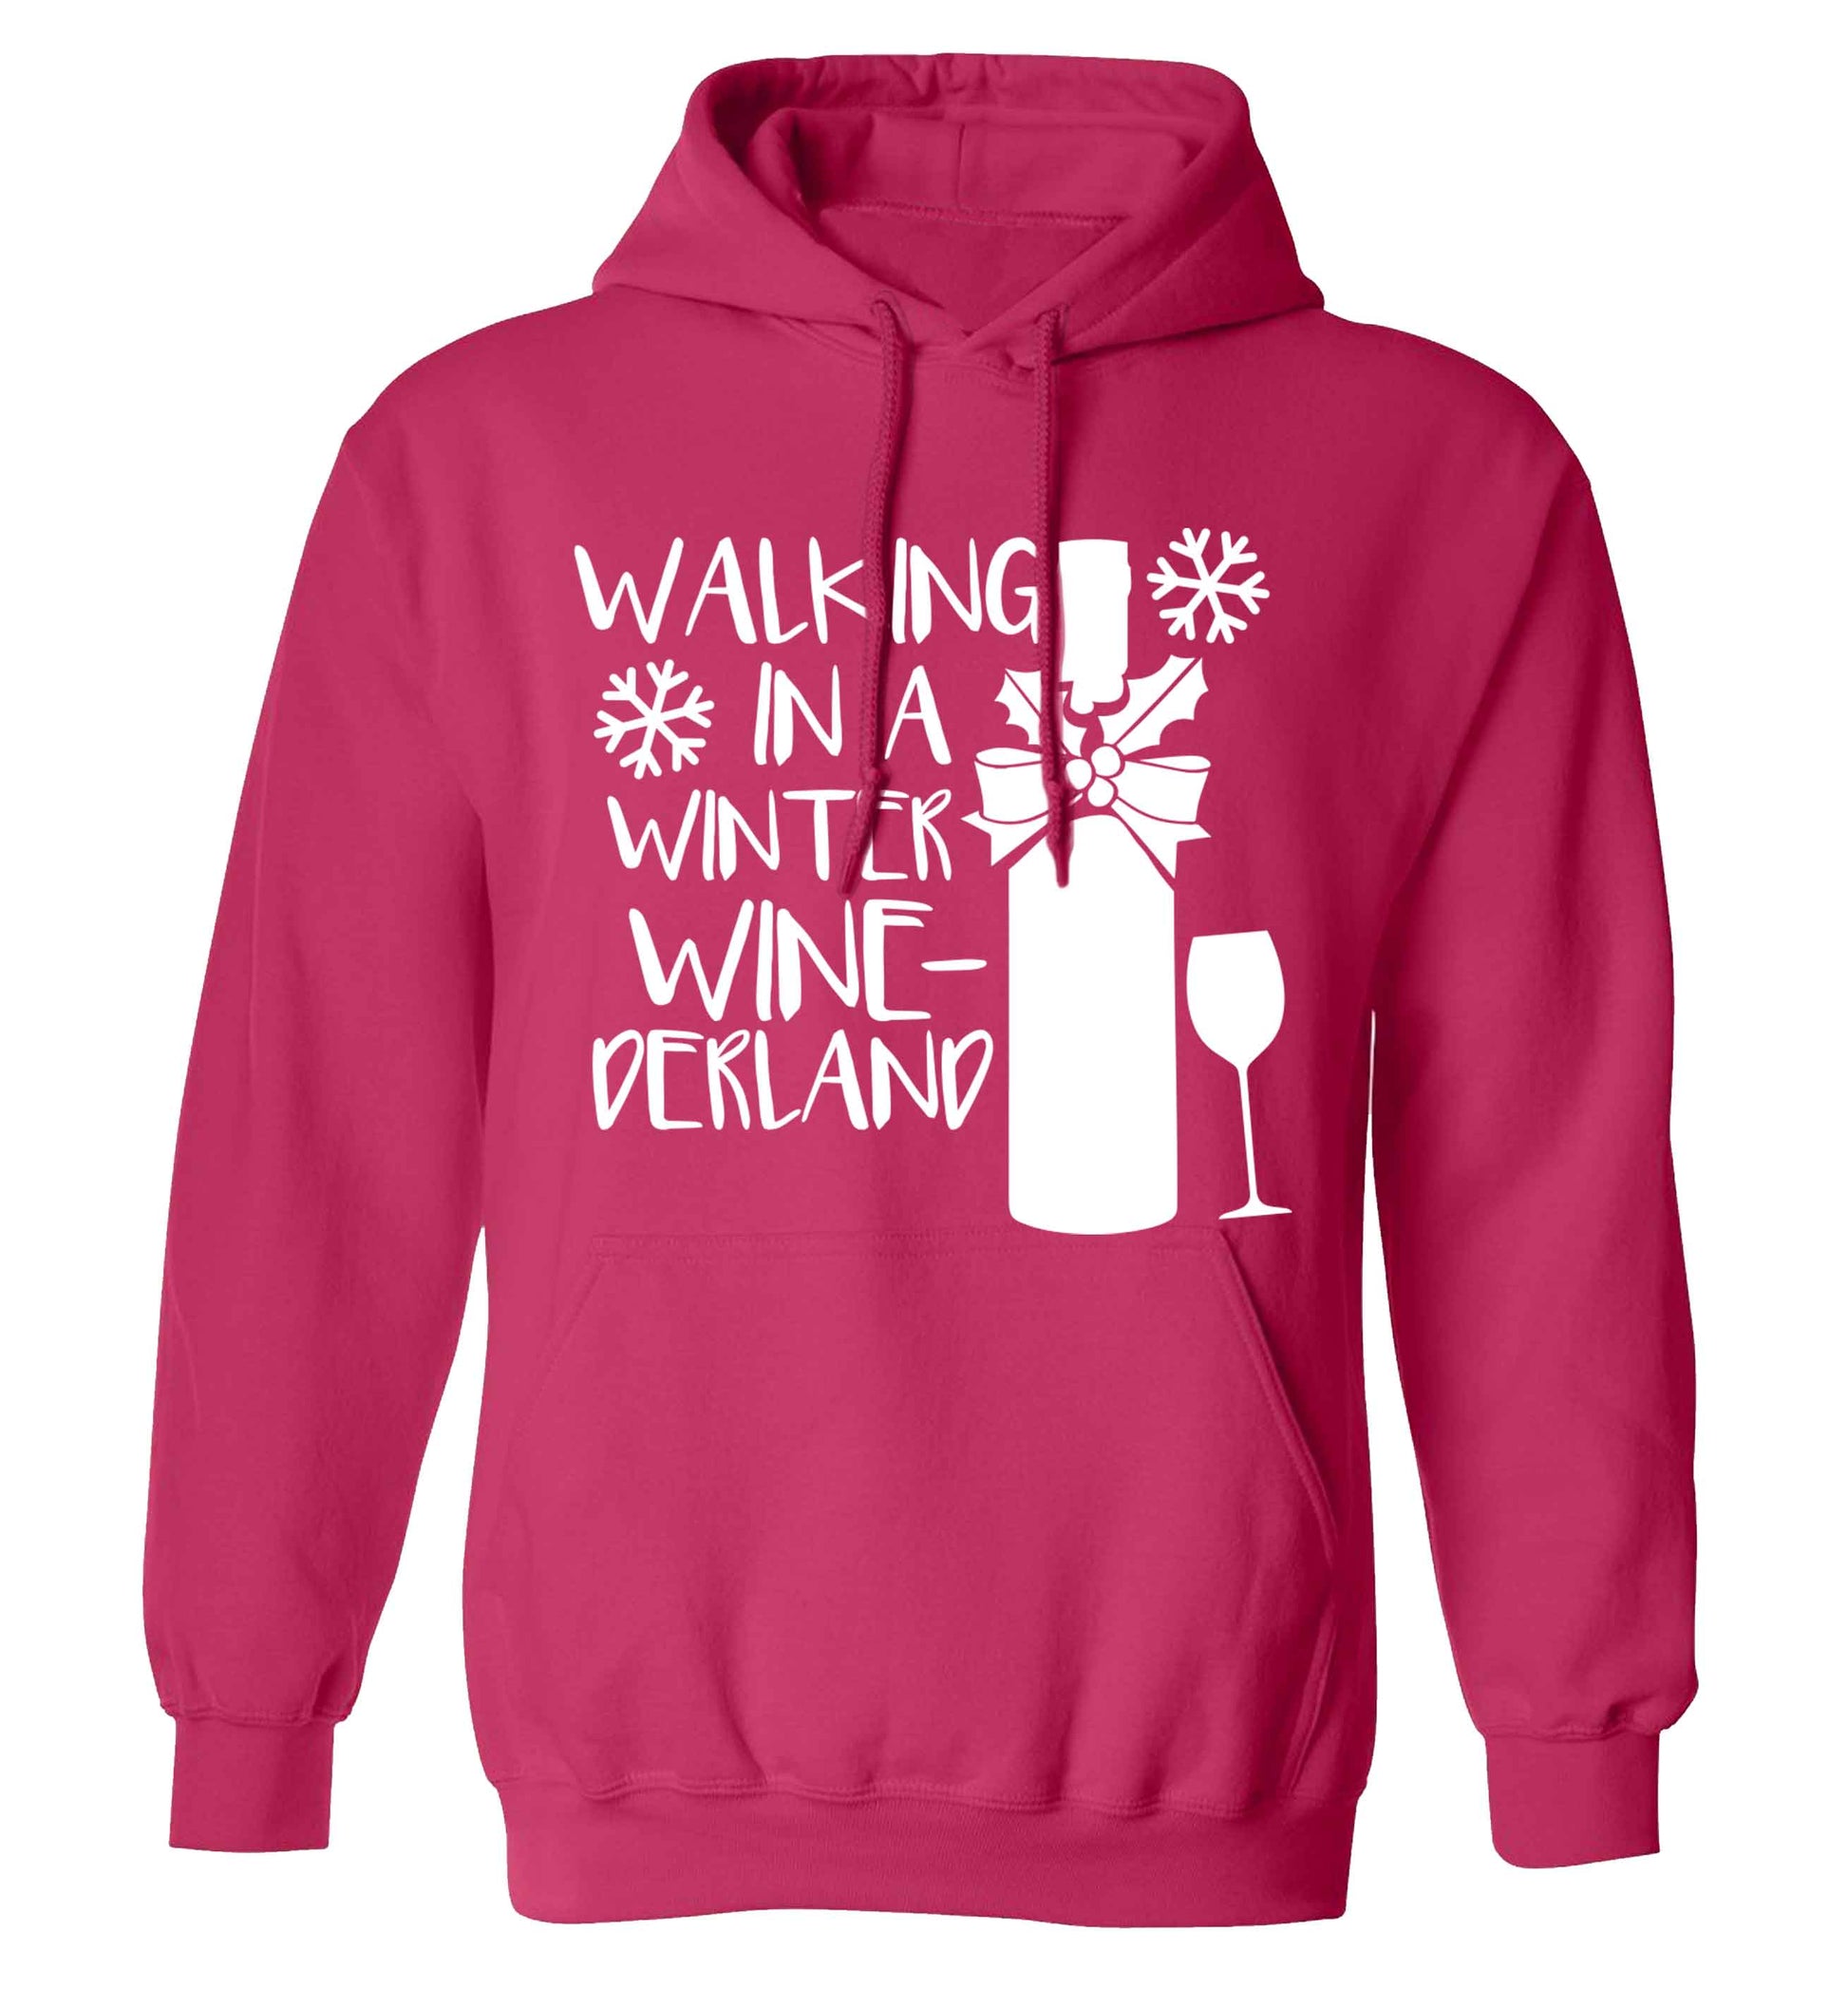 Walking in a wine-derwonderland adults unisex pink hoodie 2XL